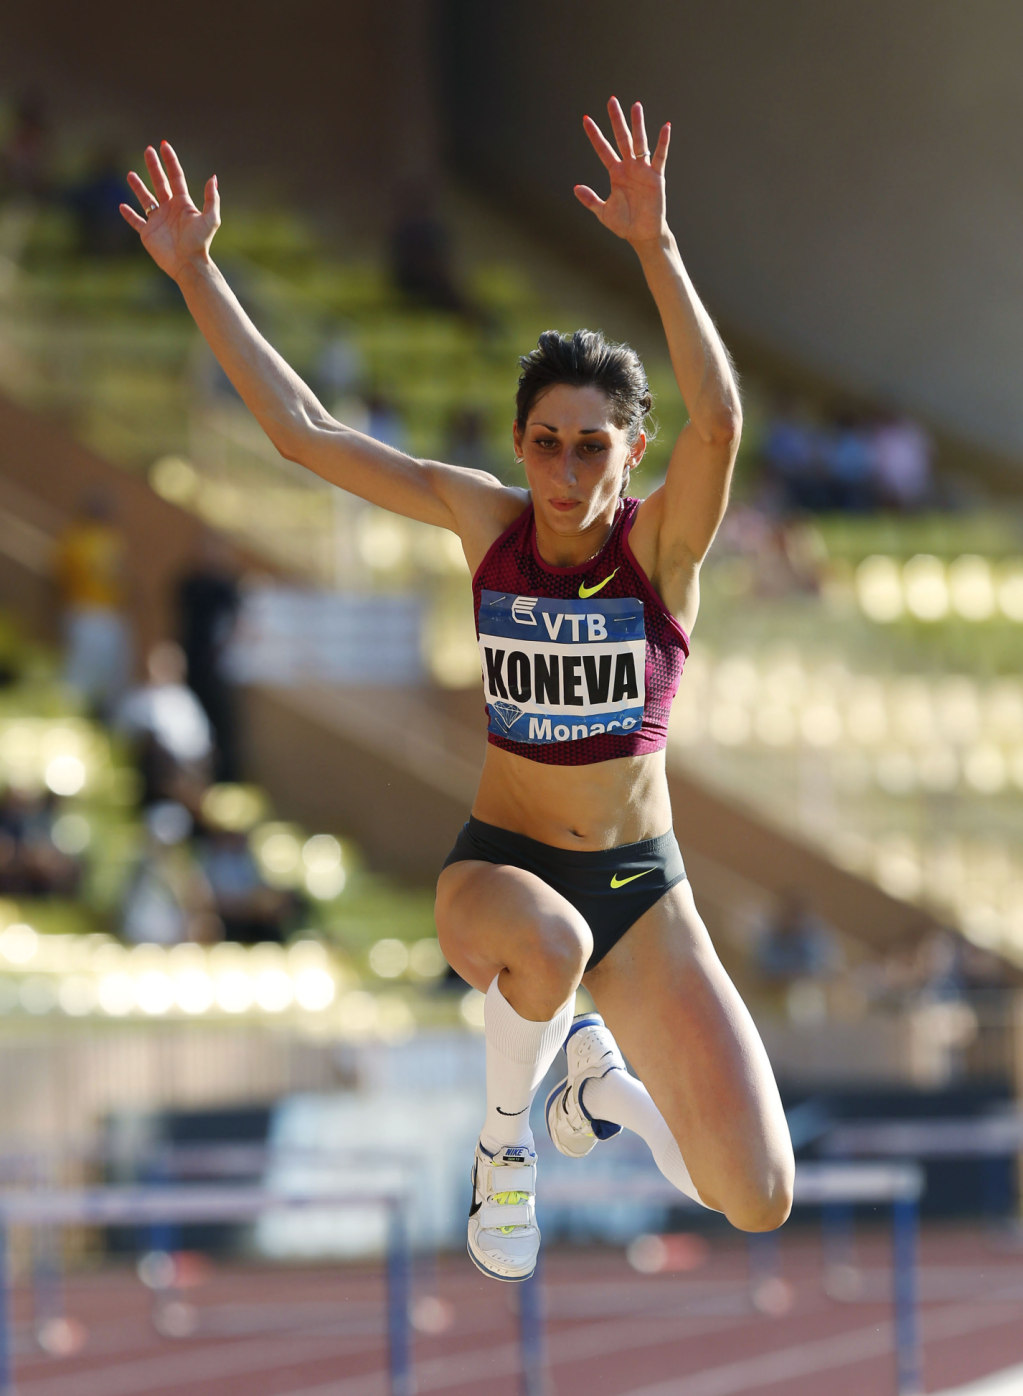 Легкая атлетика в России: Koneva of Russia competes in the women фото (photo)